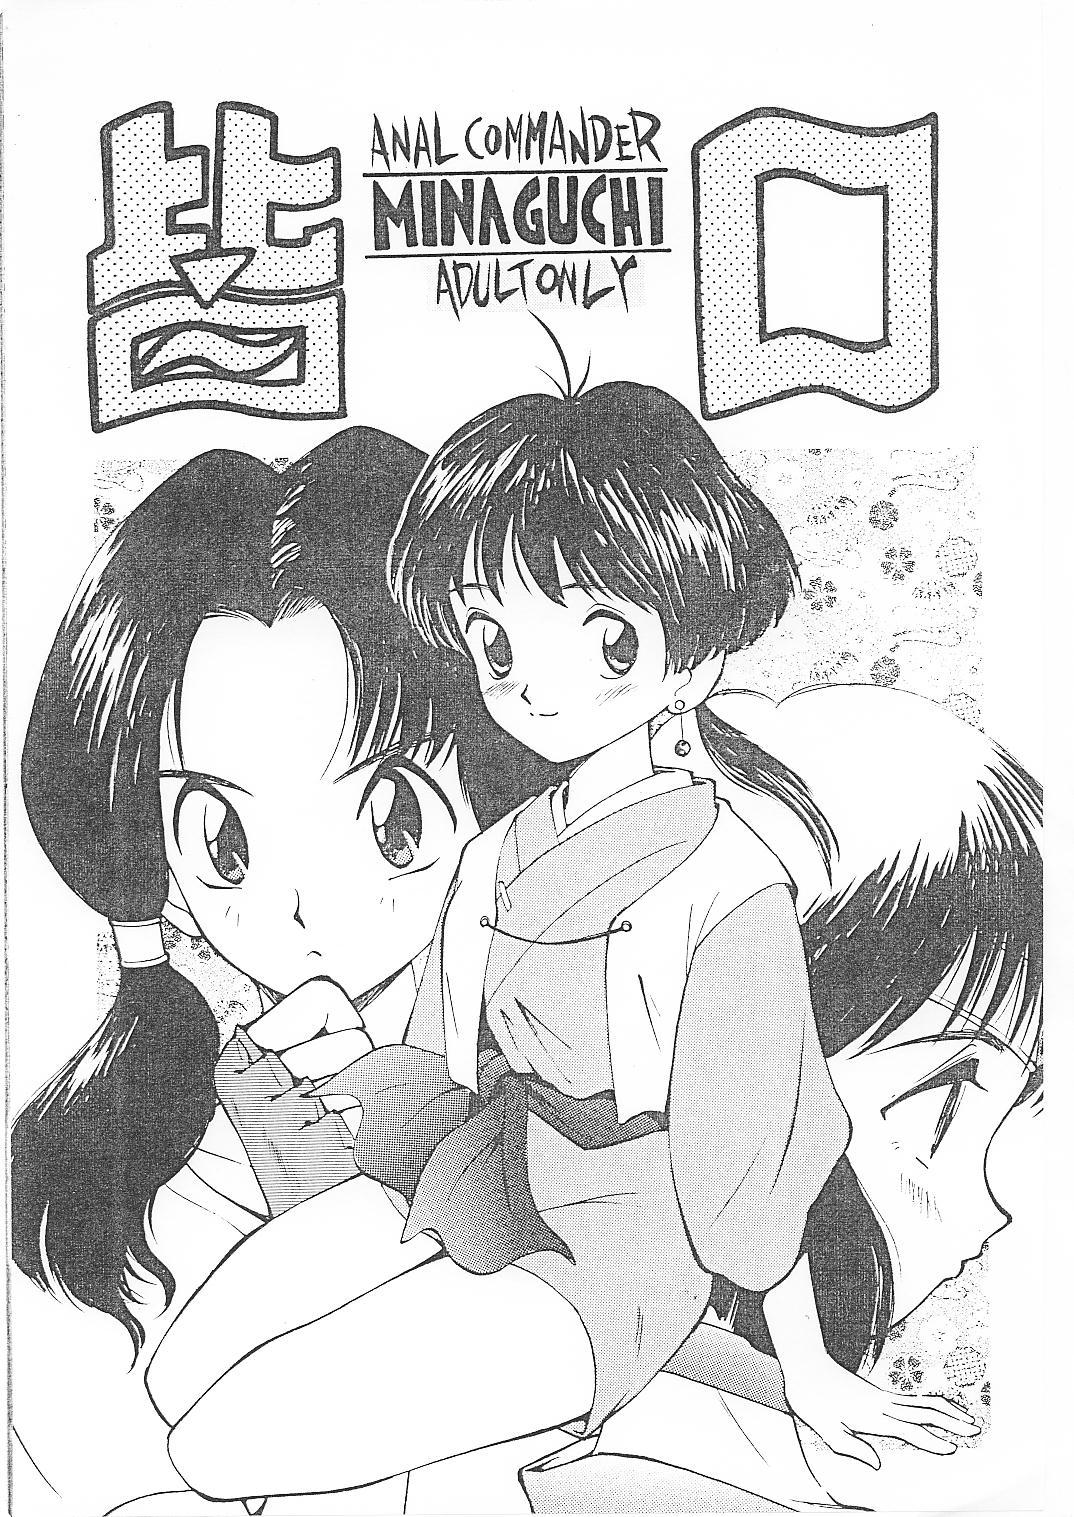 Rub Minaguchi - Anal Commander Minaguchi - Sailor moon Dragon ball z Final fantasy Love Making - Page 1